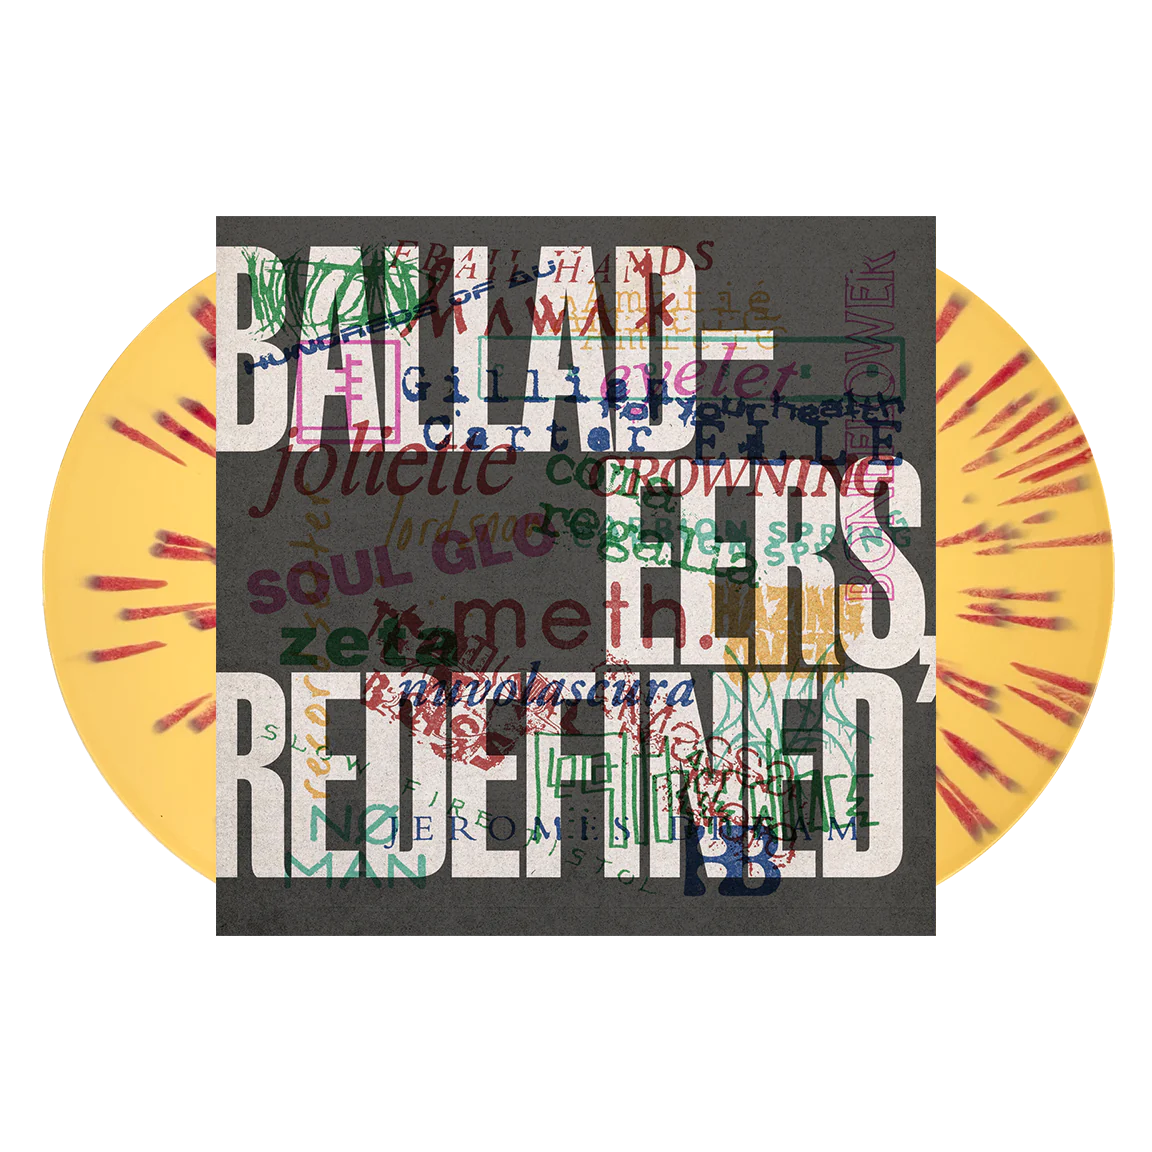 V/A "Balladeers, Redefined" 2xLP